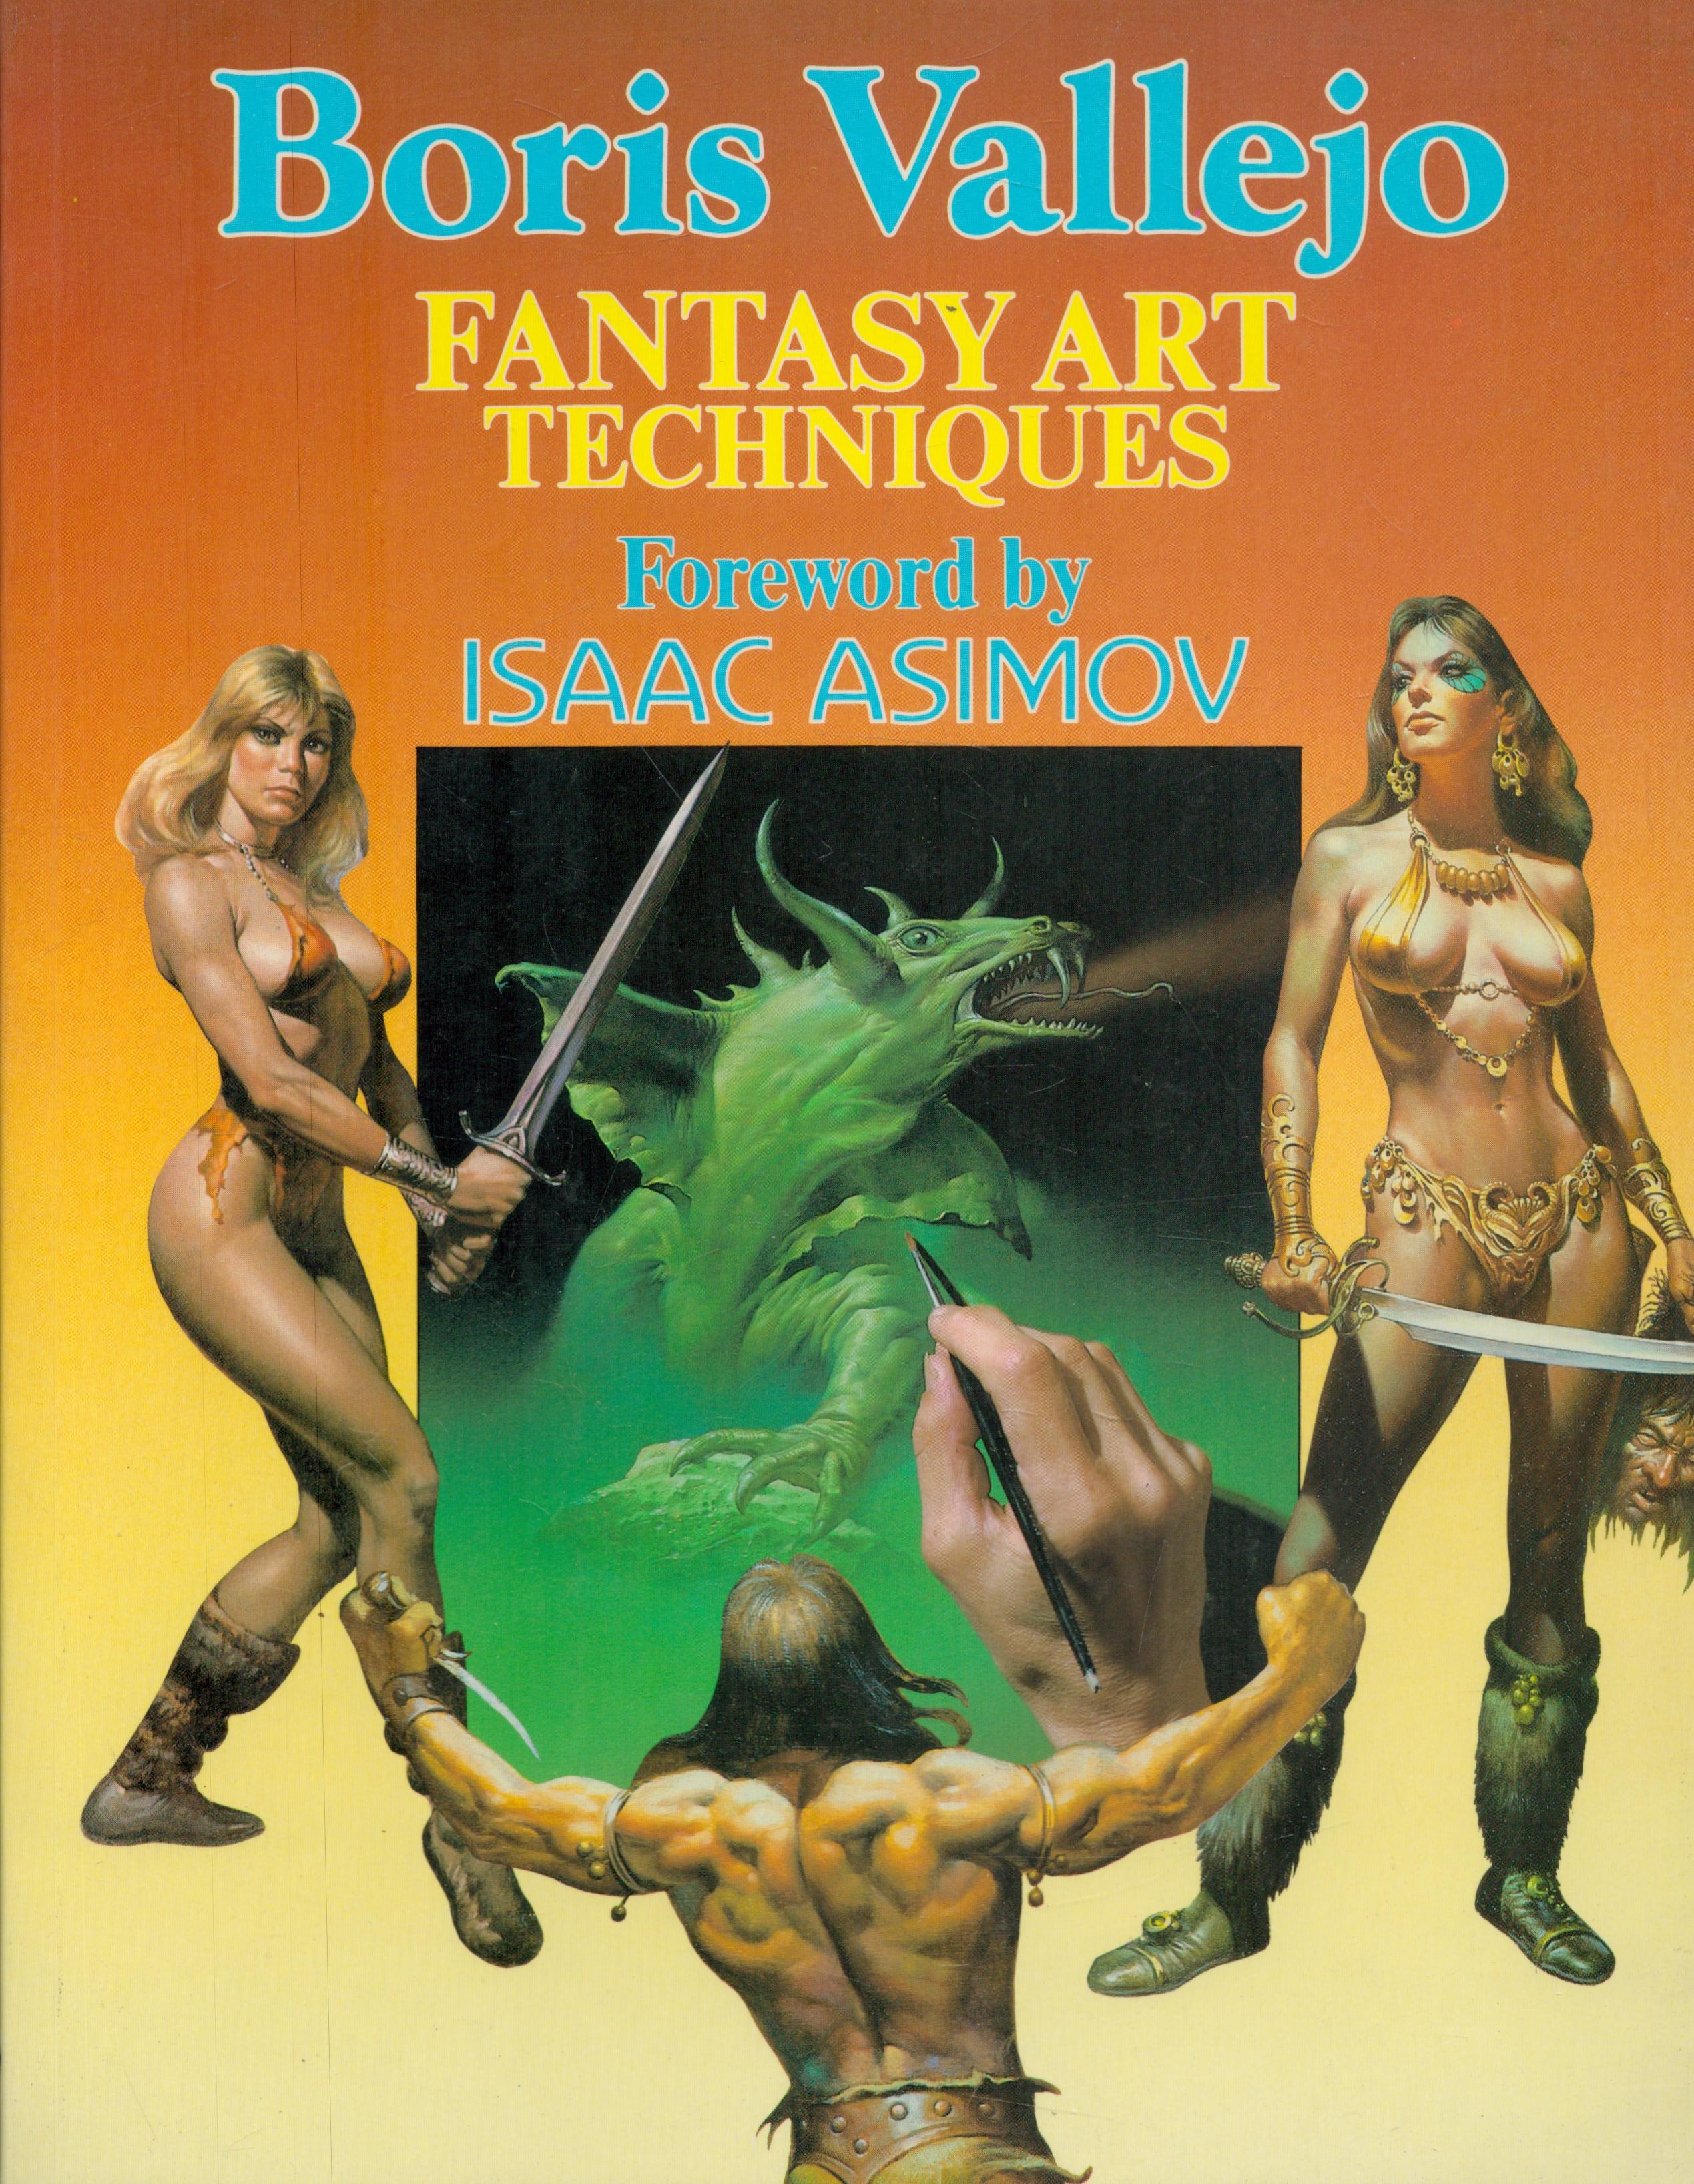 Fantasy Art Techniques & The Fantastic Art of Boris Vallejo 1985 & 1978 softback books with 127 &